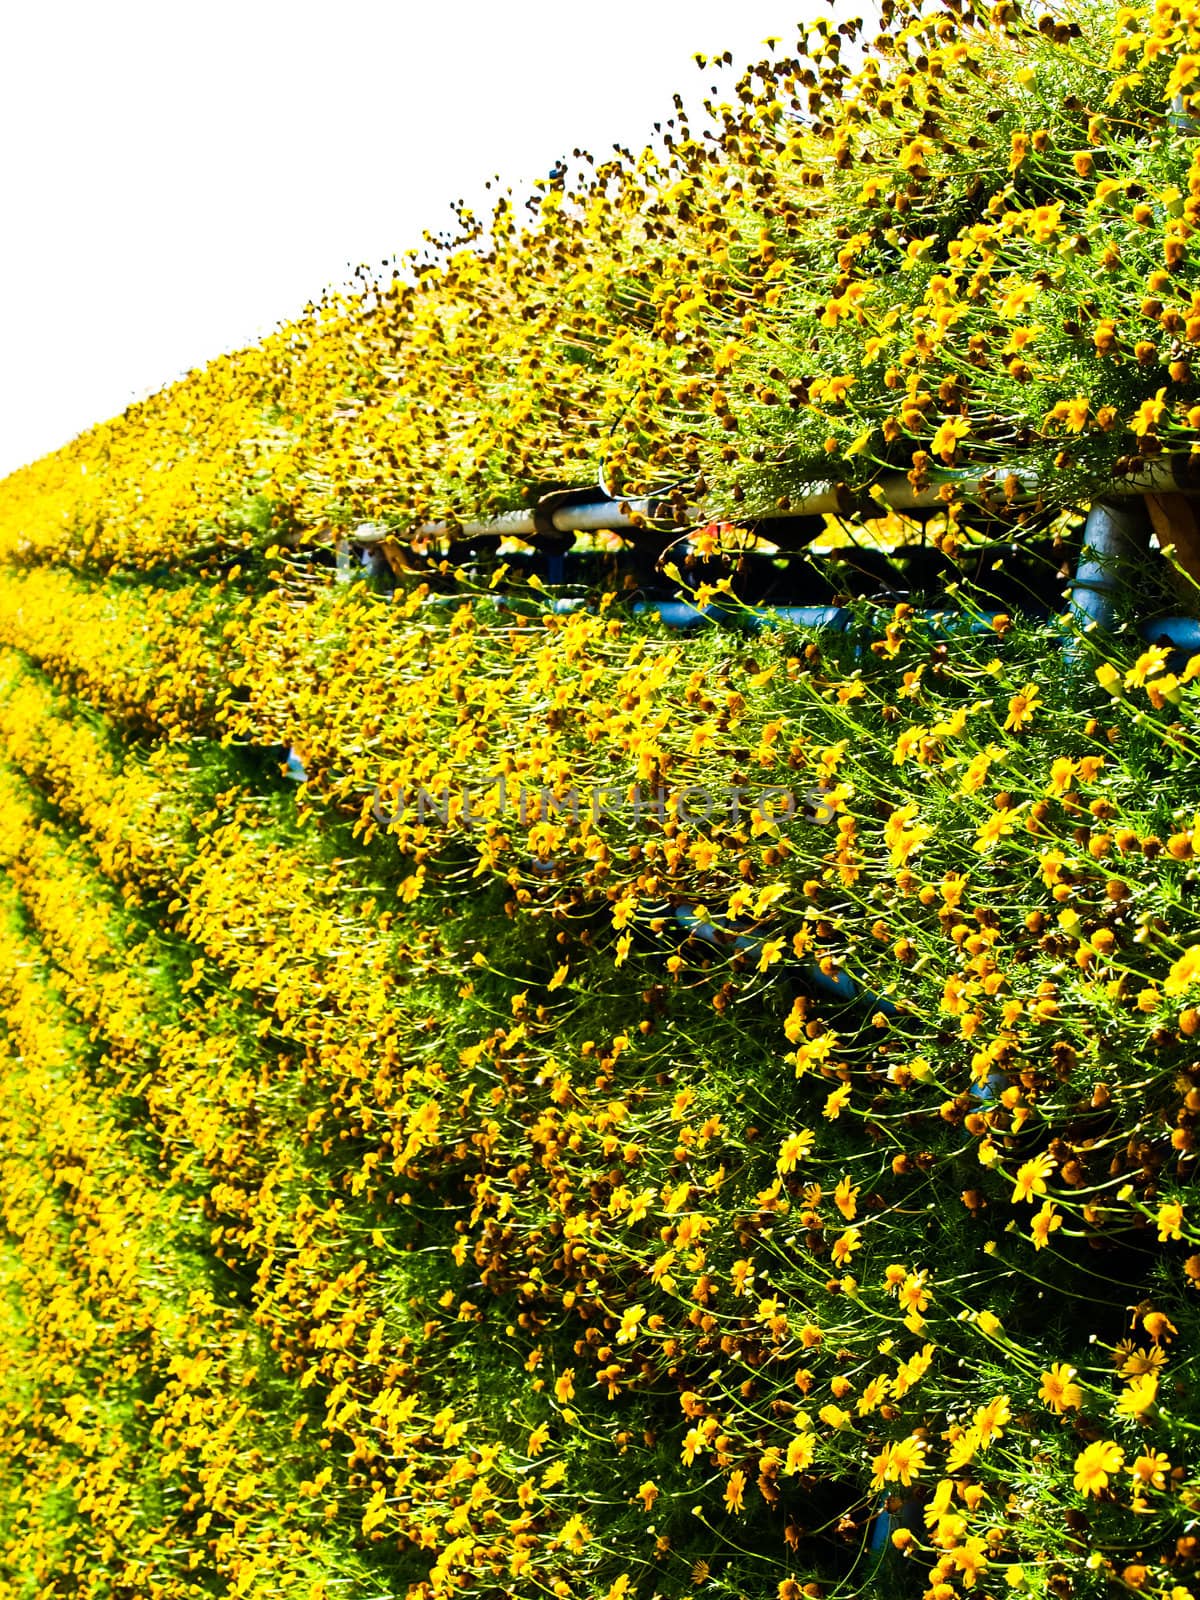 Yellow Cosmos flower wall in nature by gururugu